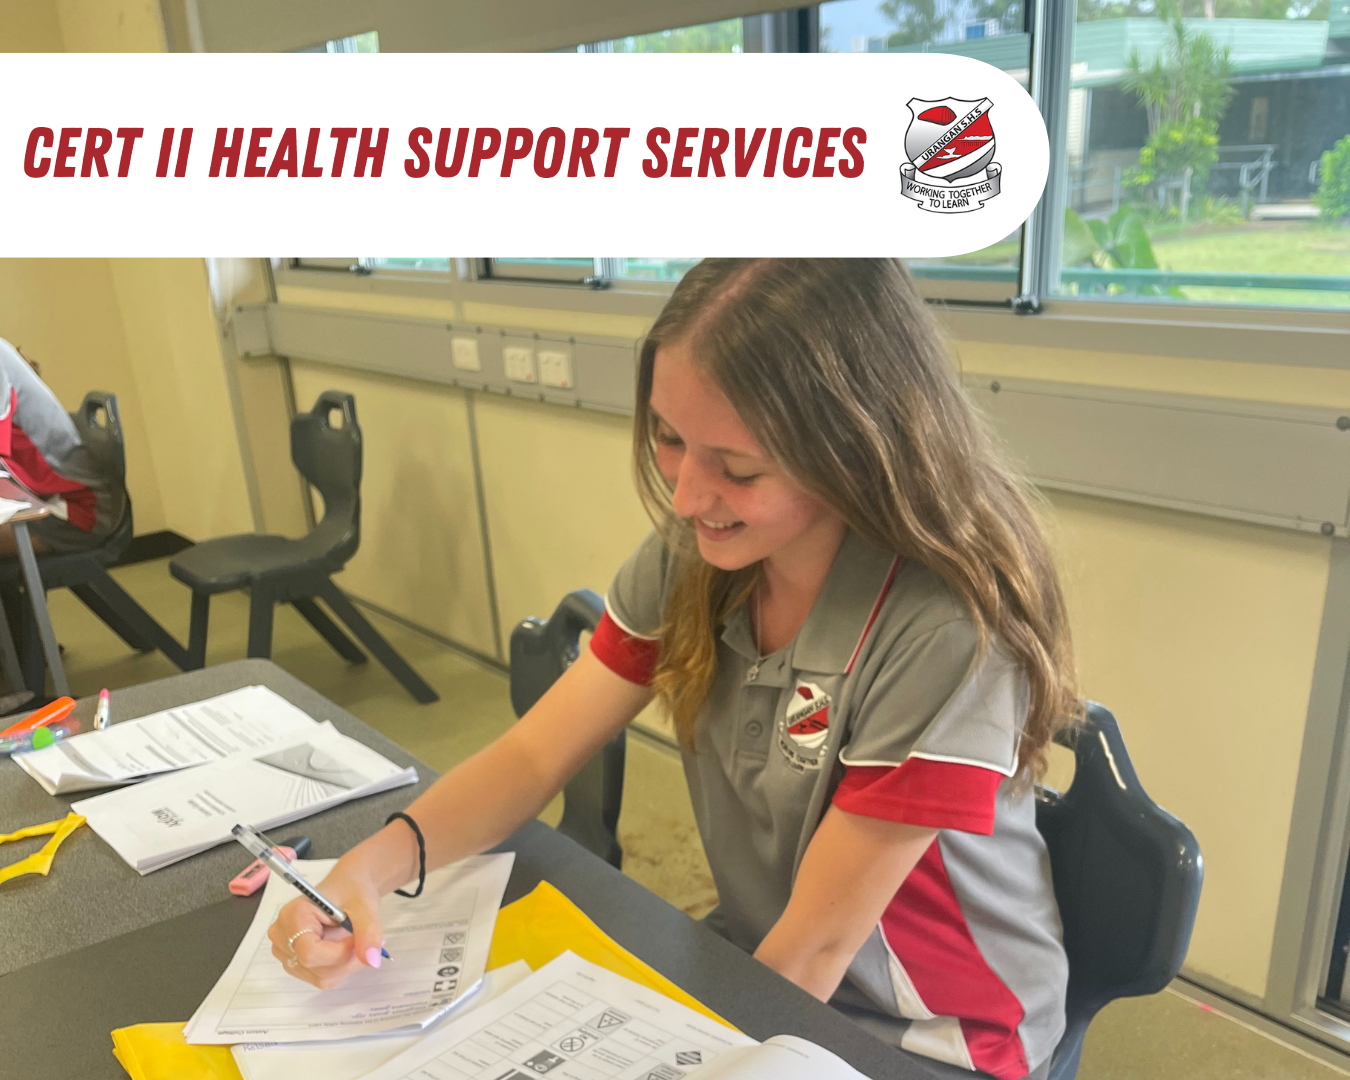 Cert II Health Support Services